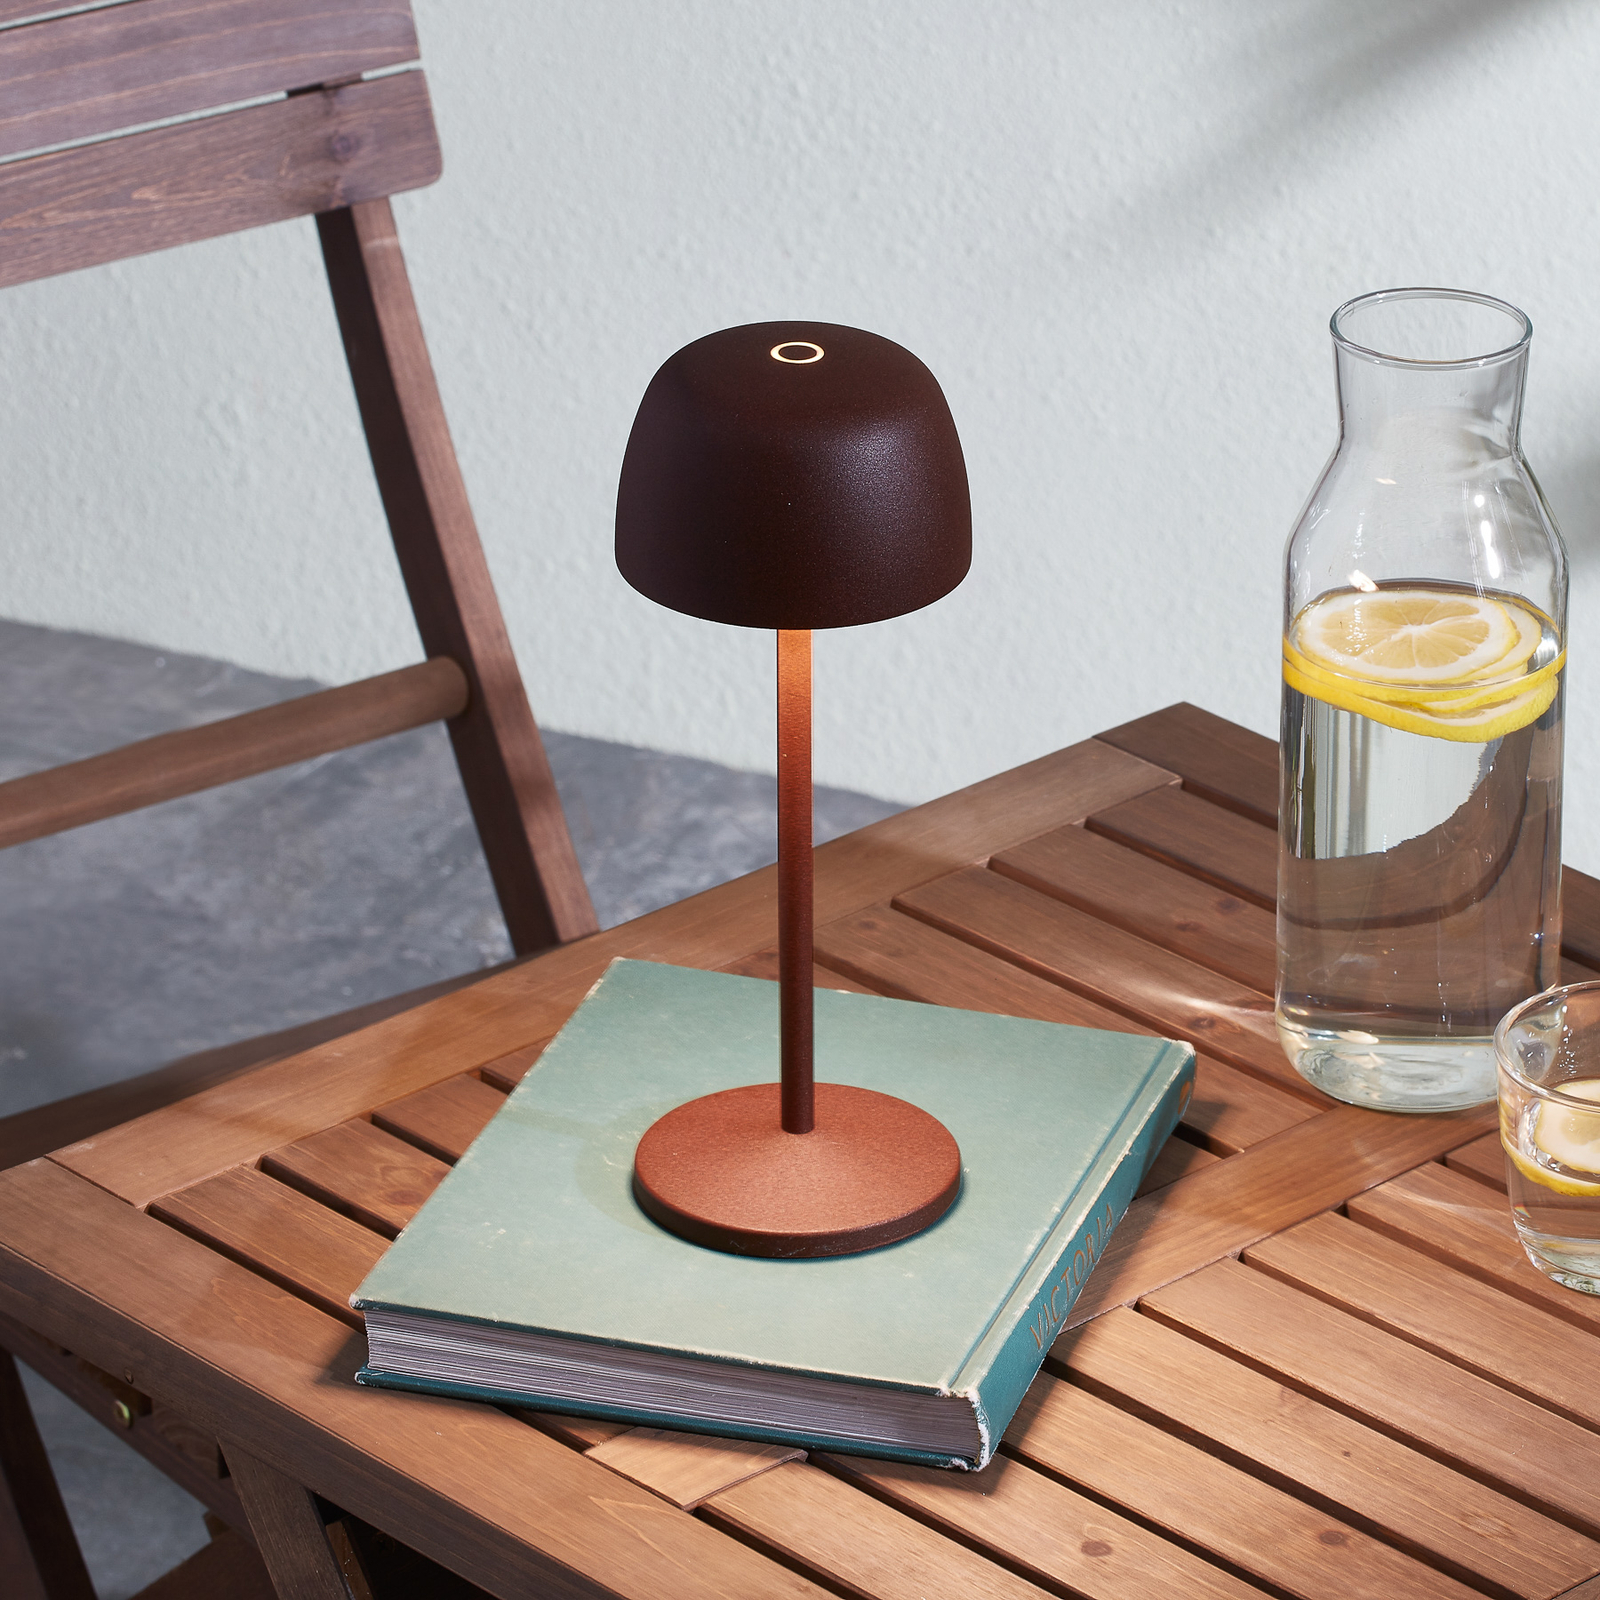 Lindby LED table lamp Arietty, brown, set of 3, aluminium